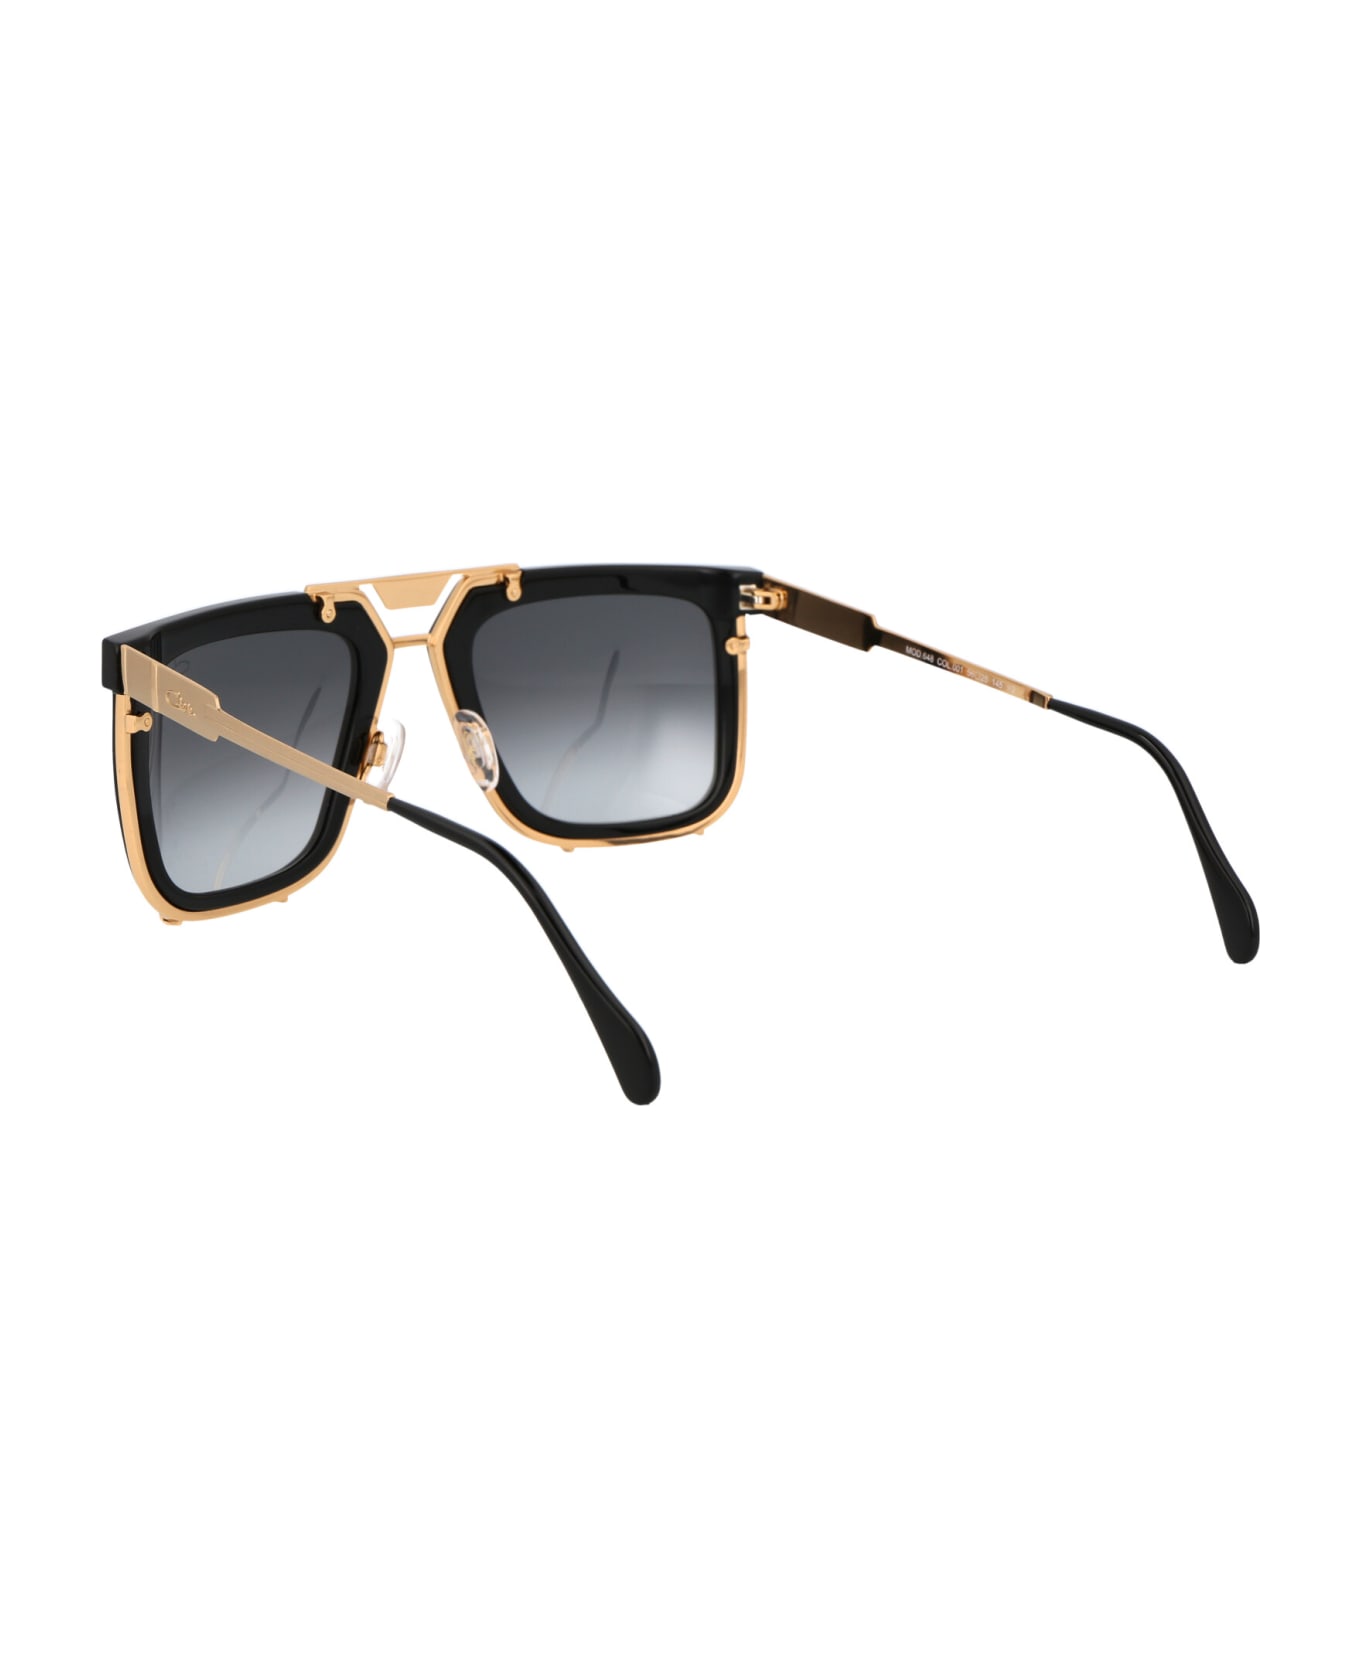 Cazal Mod. 648 Sunglasses - 001 GOLD BLACK サングラス